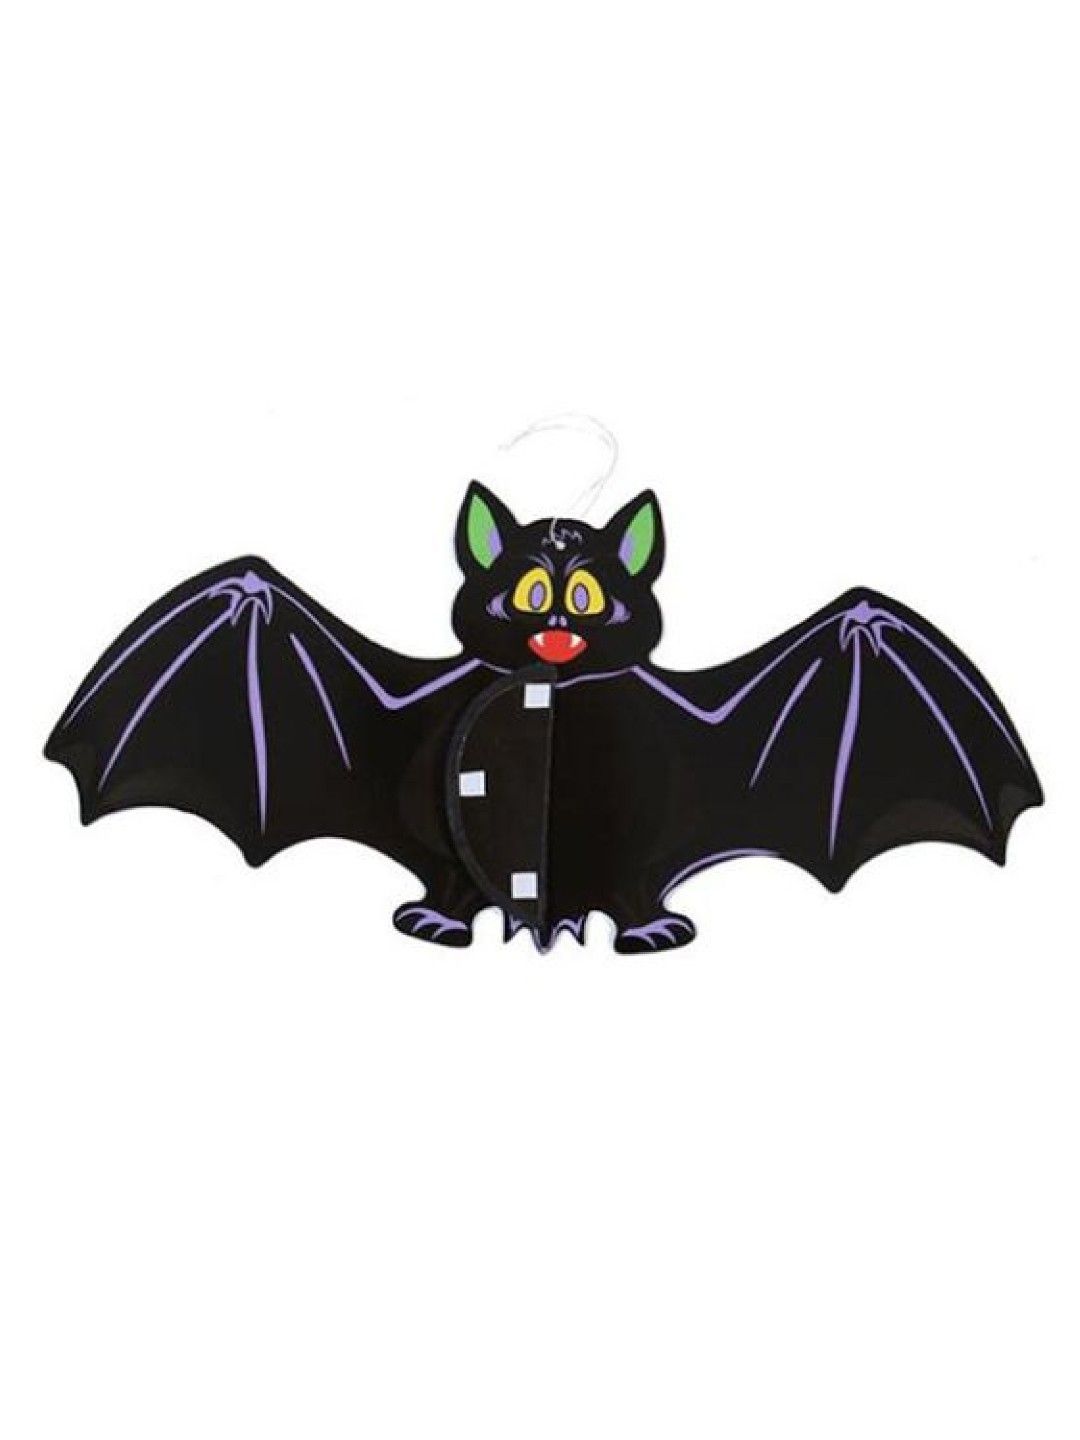 Elves of the Party Halloween Decor: Bat